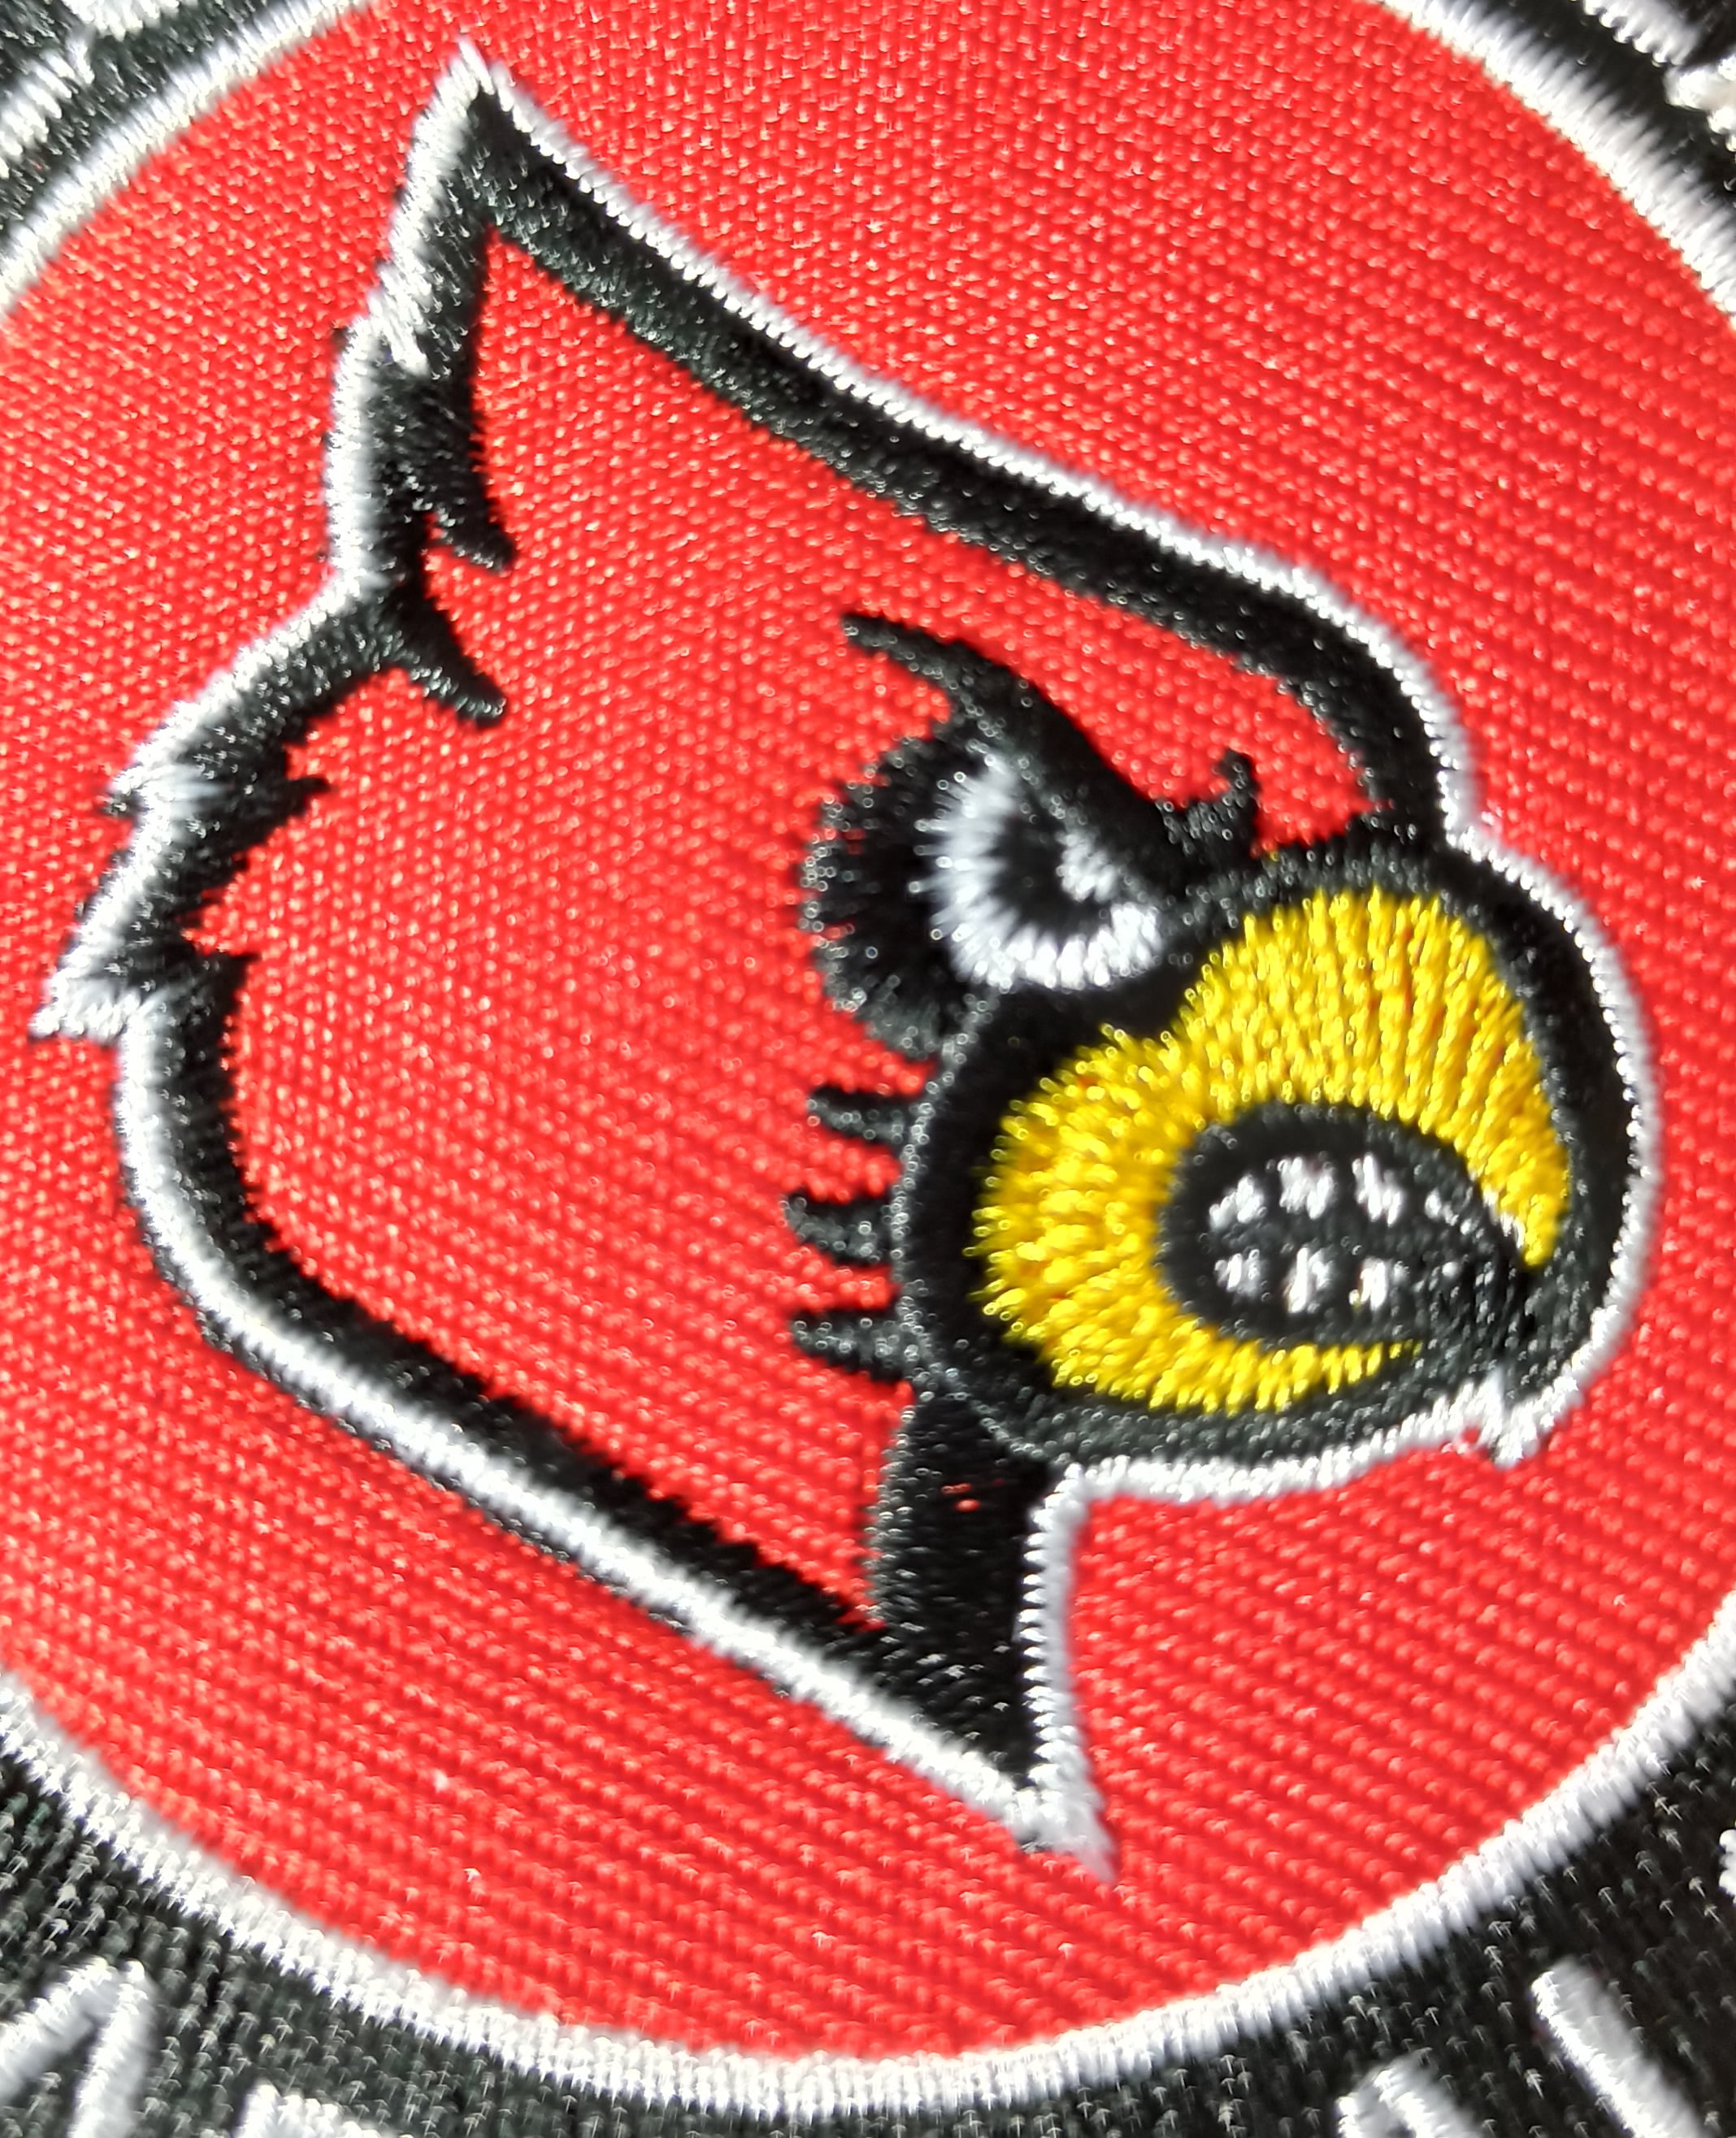 Patch Collection Louisville Cardinals Solid Metal Chrome Emblem